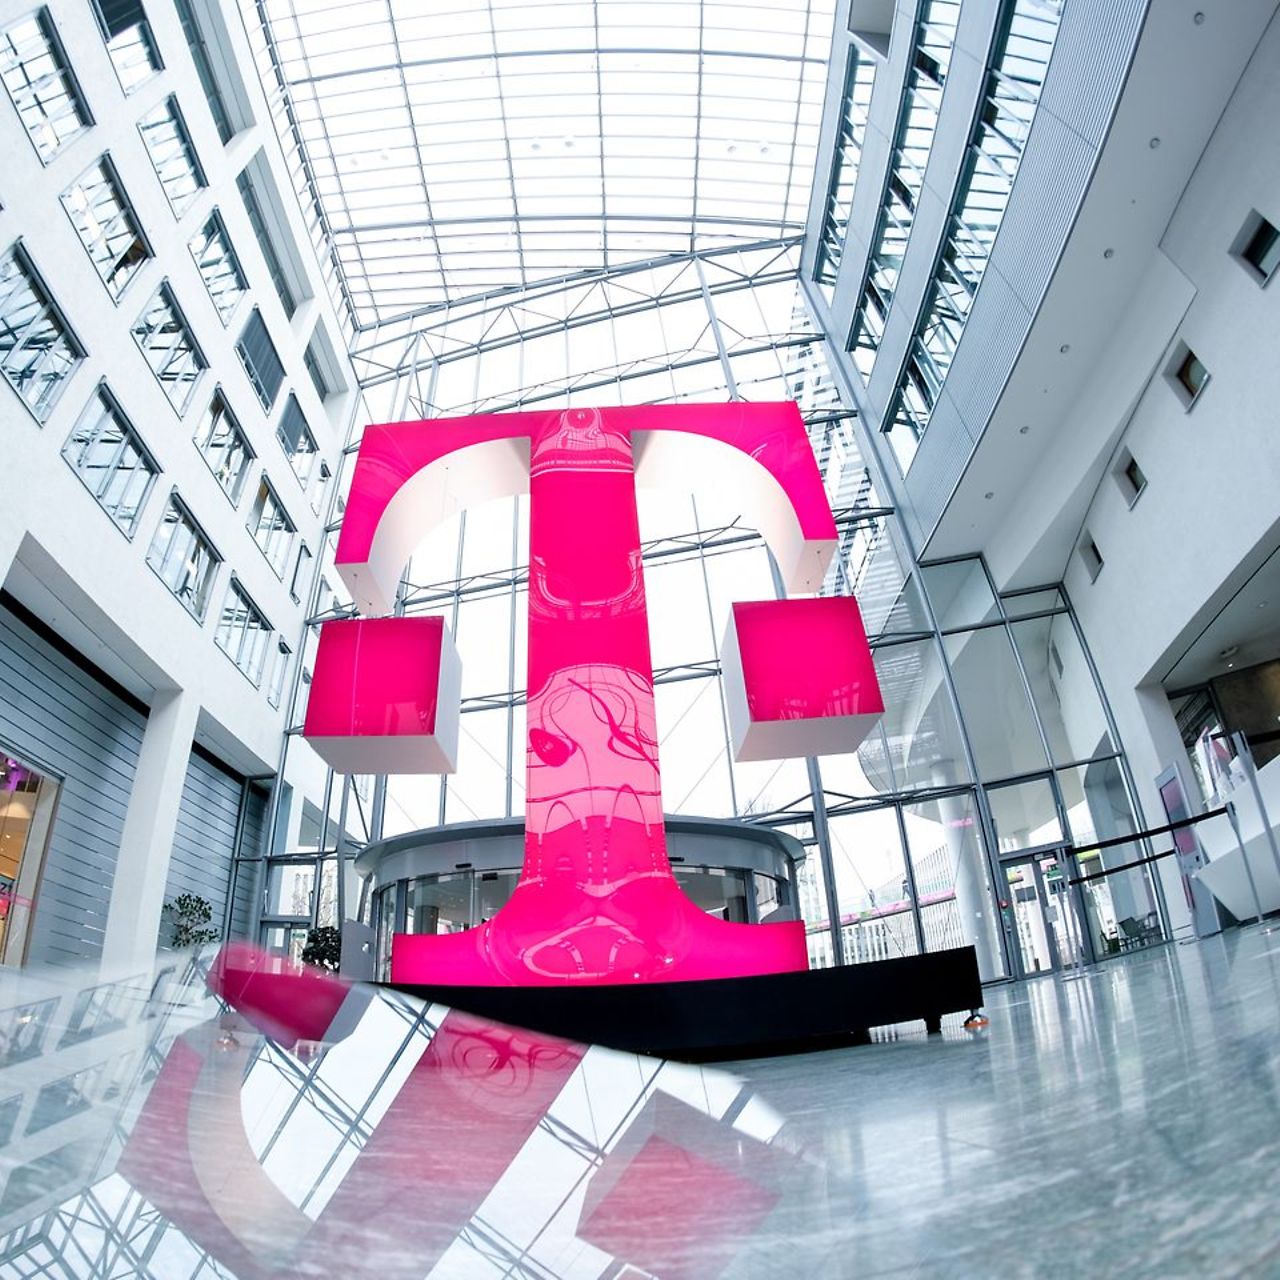 Telekom Logo from Headquaters in Bonn